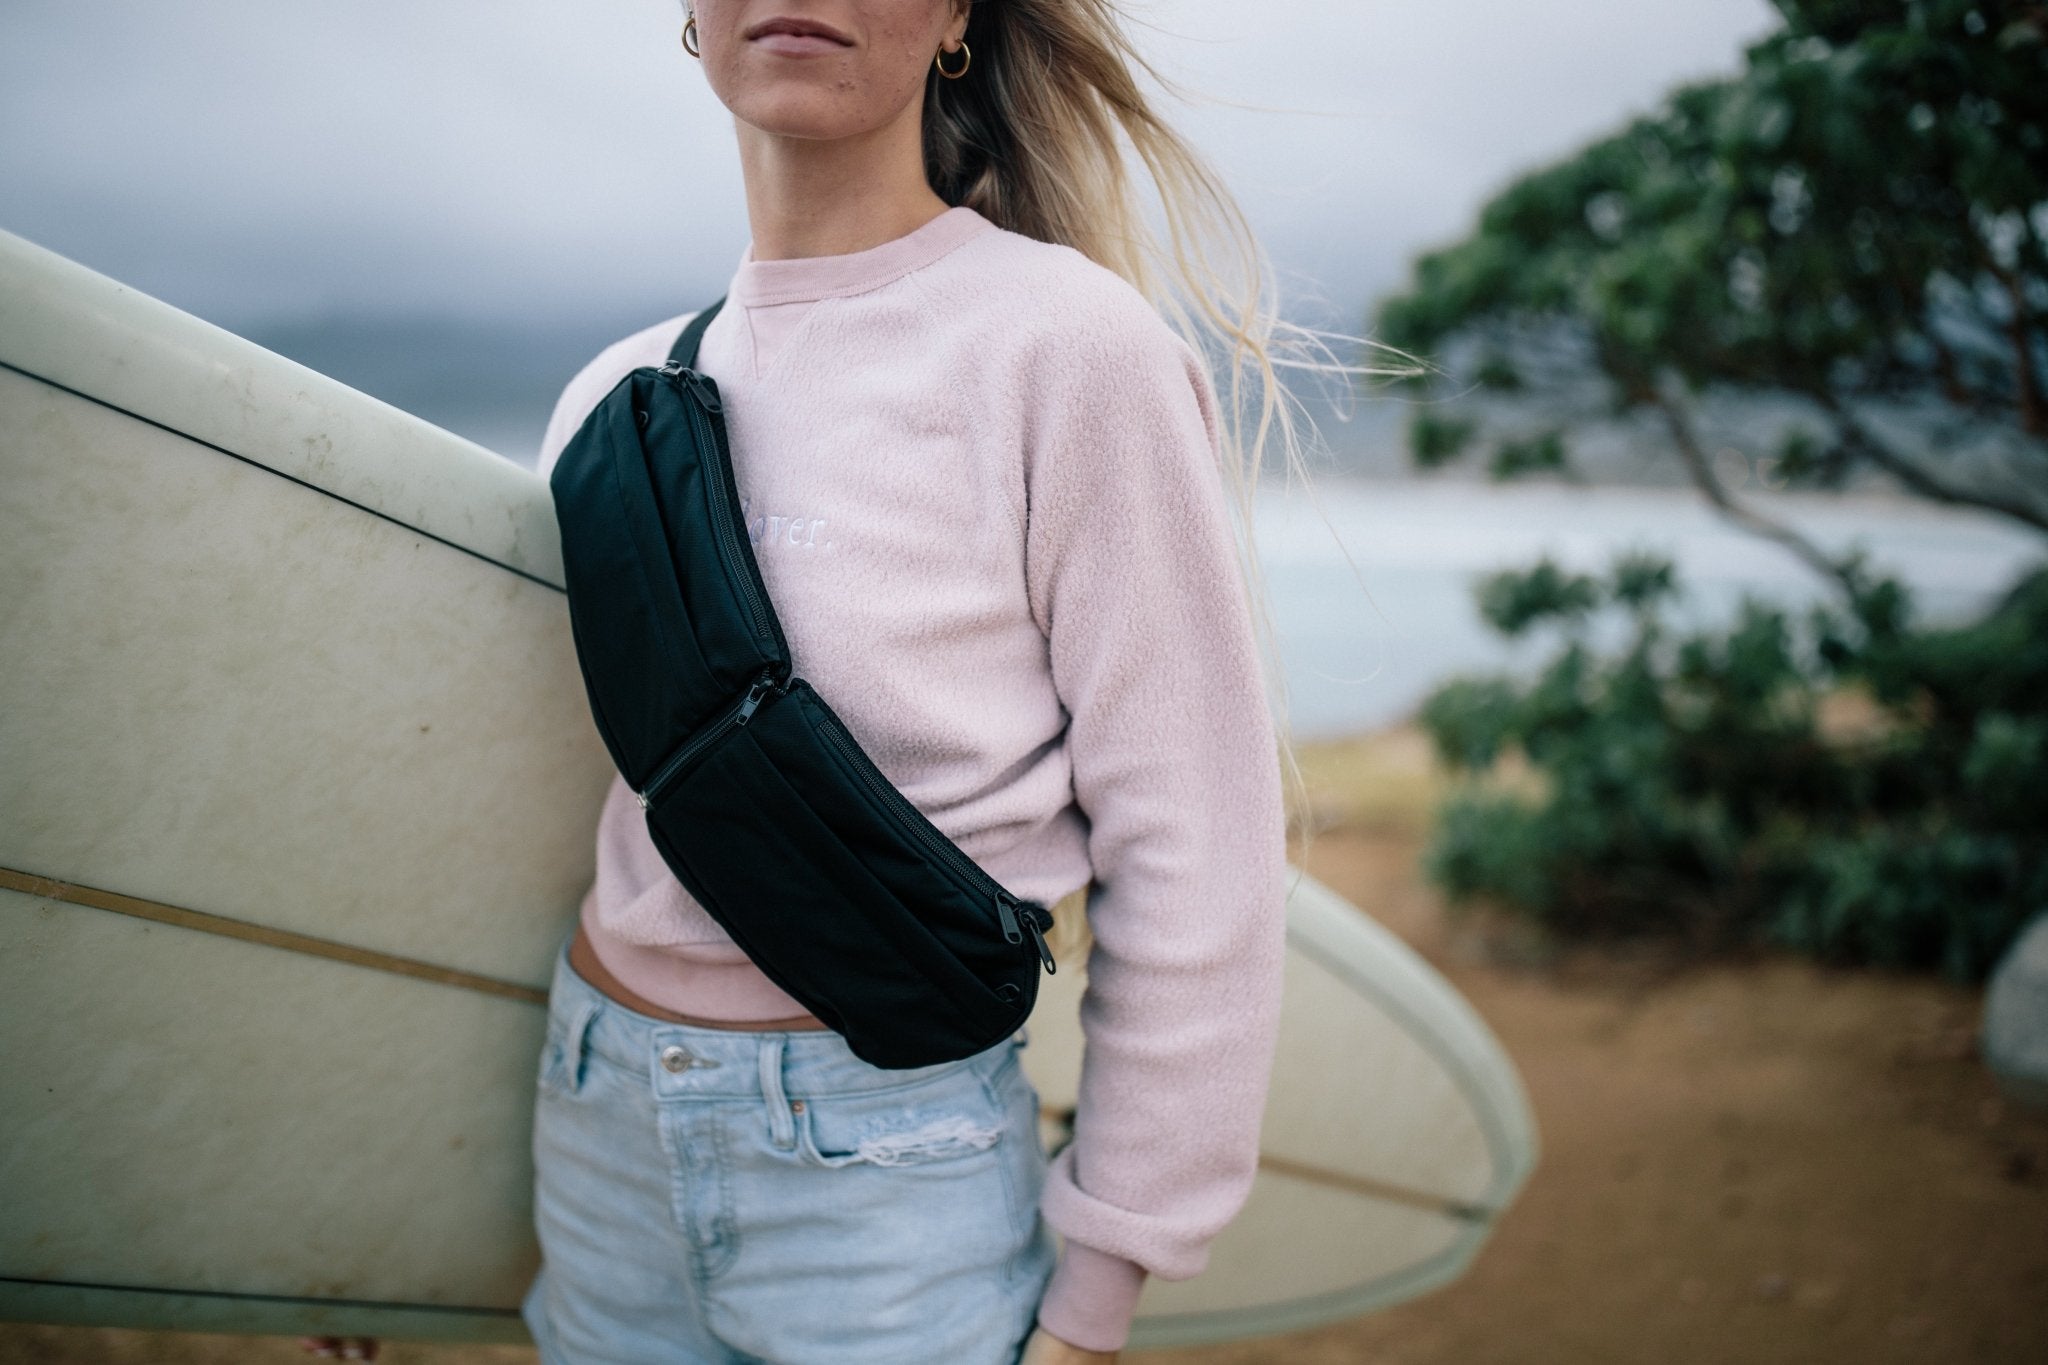 2L Sling Belt (42L Backpack Waist Belt/Sling Bag) - Gravel - Woman wearing 2 liter sling bag across chest holding a surfboard